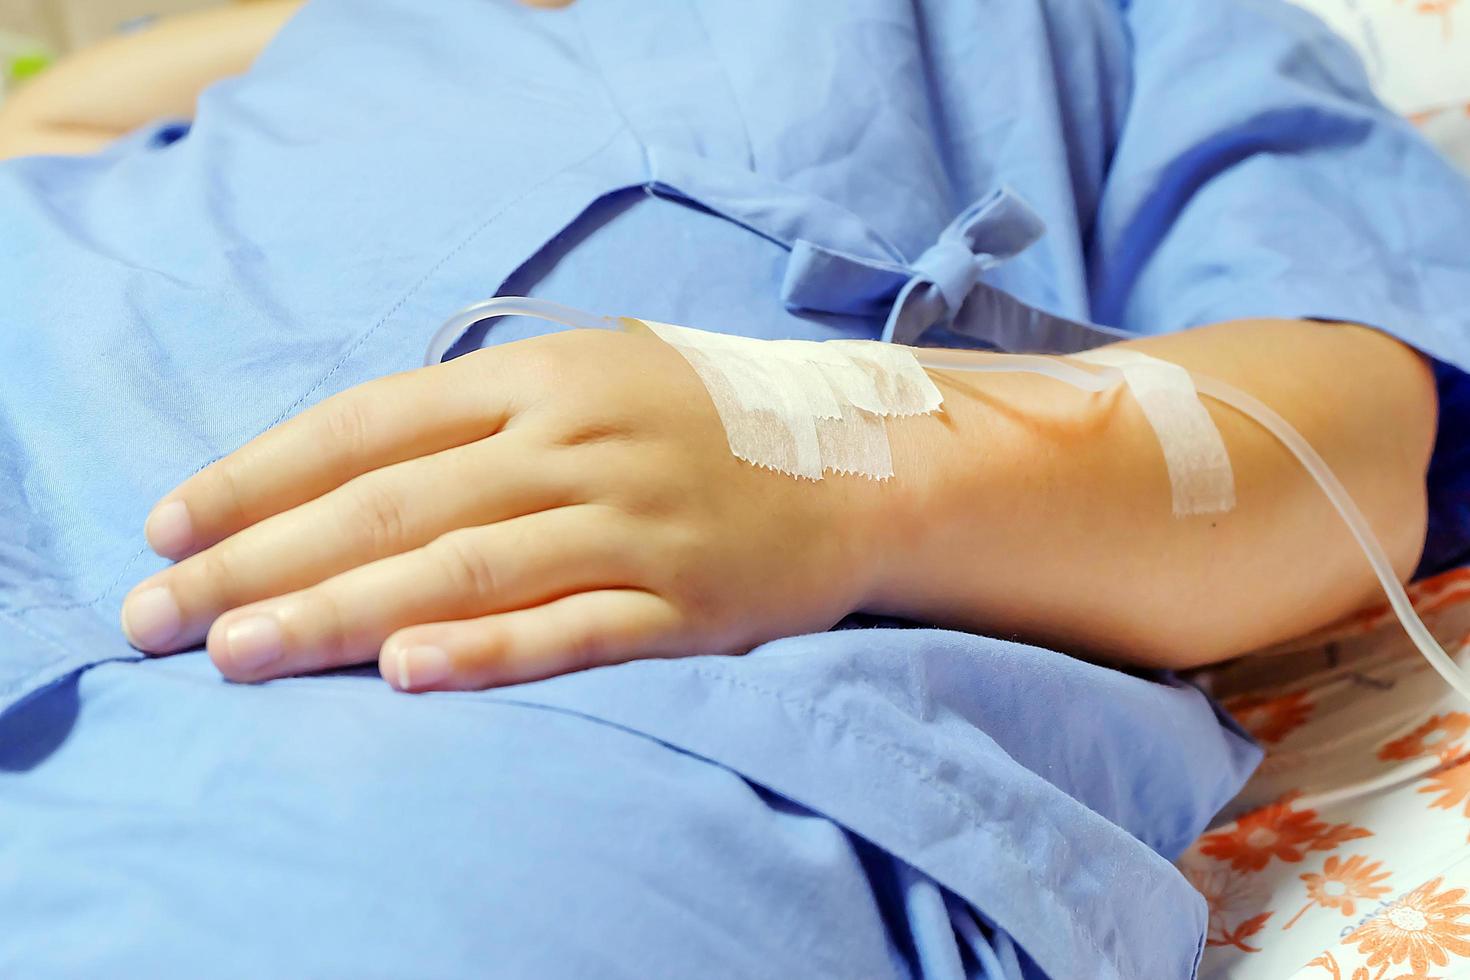 Saline intravenous drip in a women patient hand photo